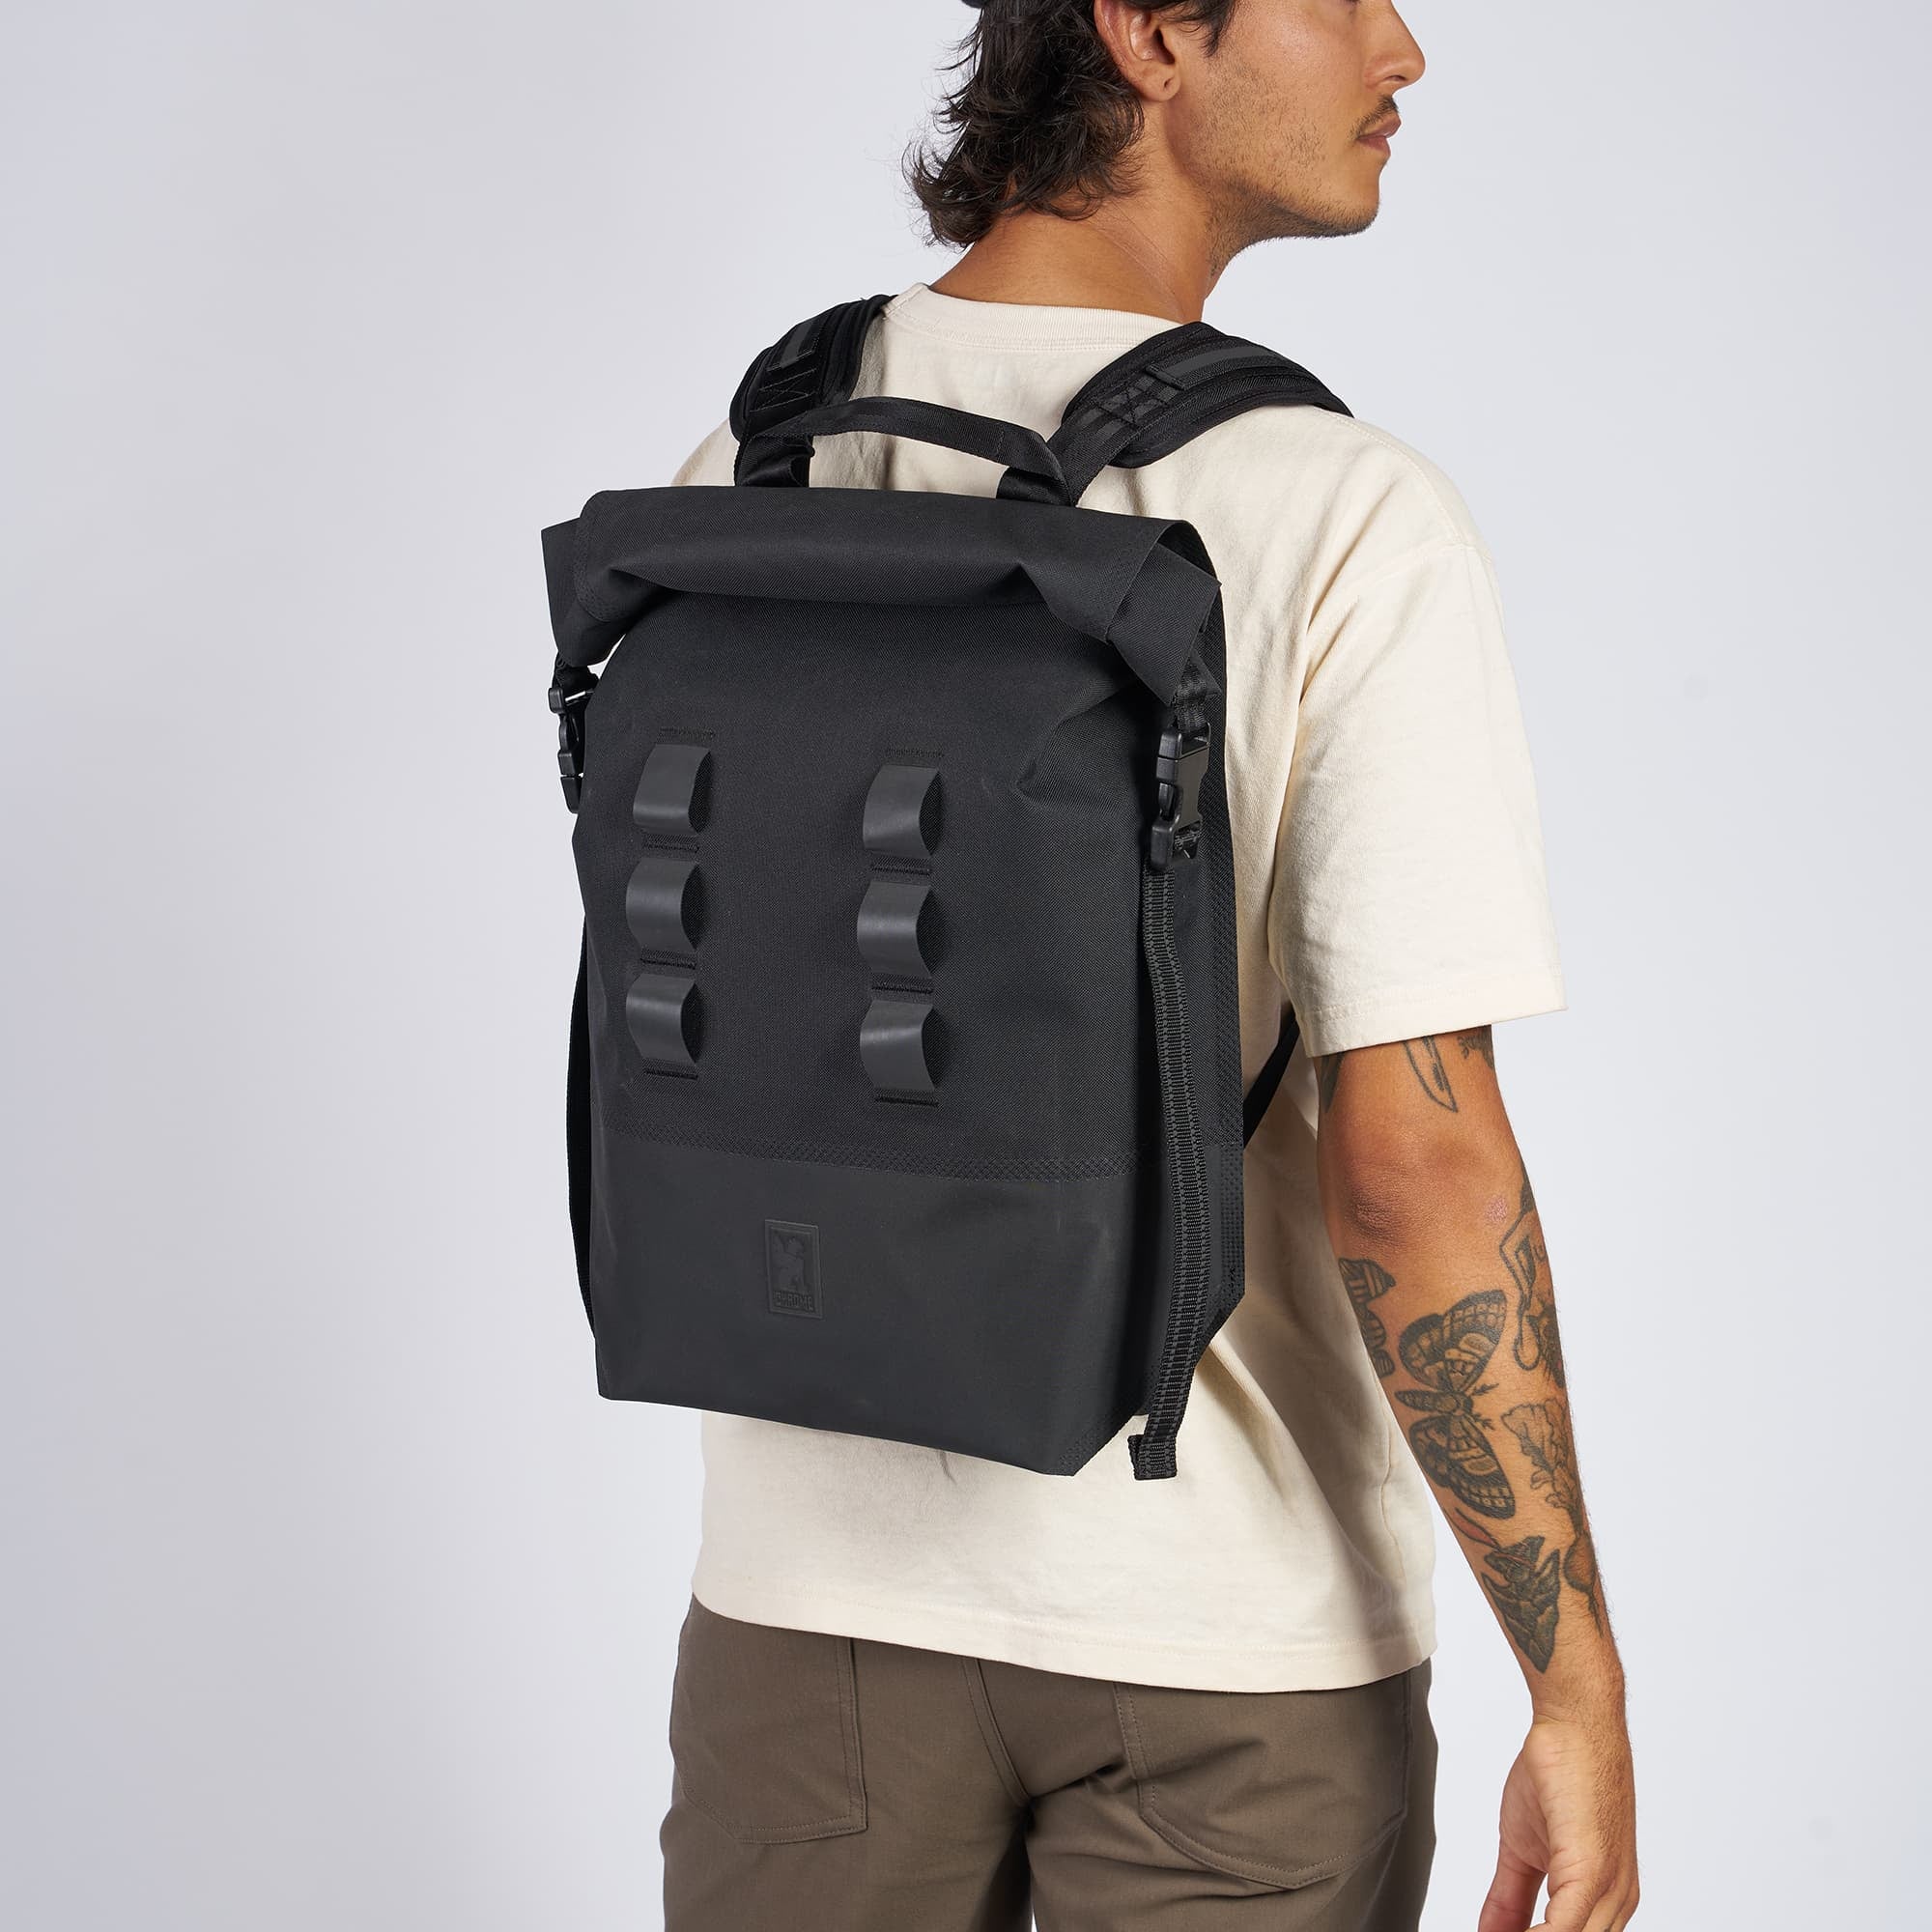 Waterproof 20L backpack in black worn by a man